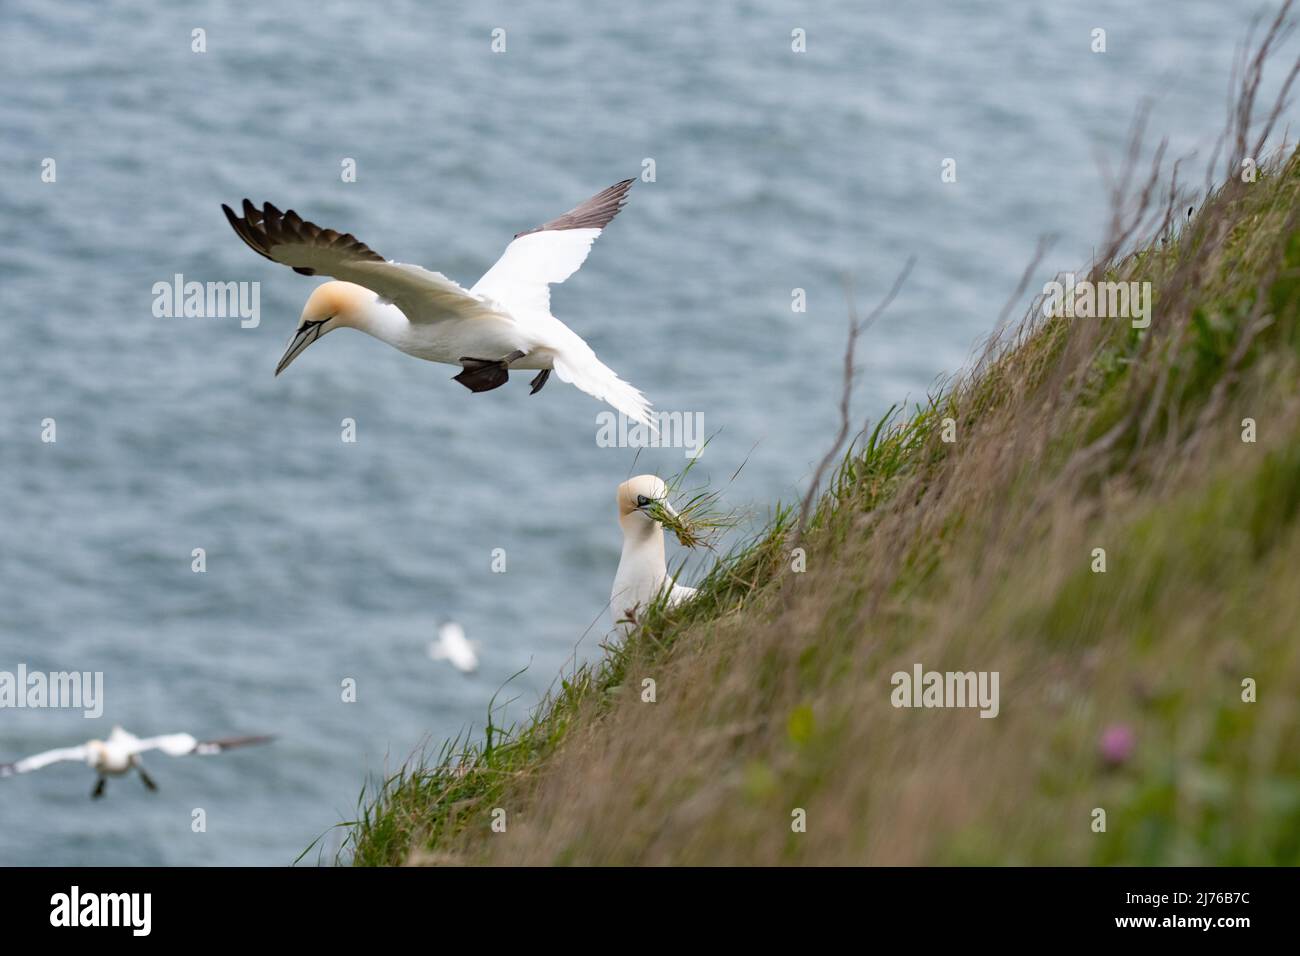 gannets flying over grass Stock Photo